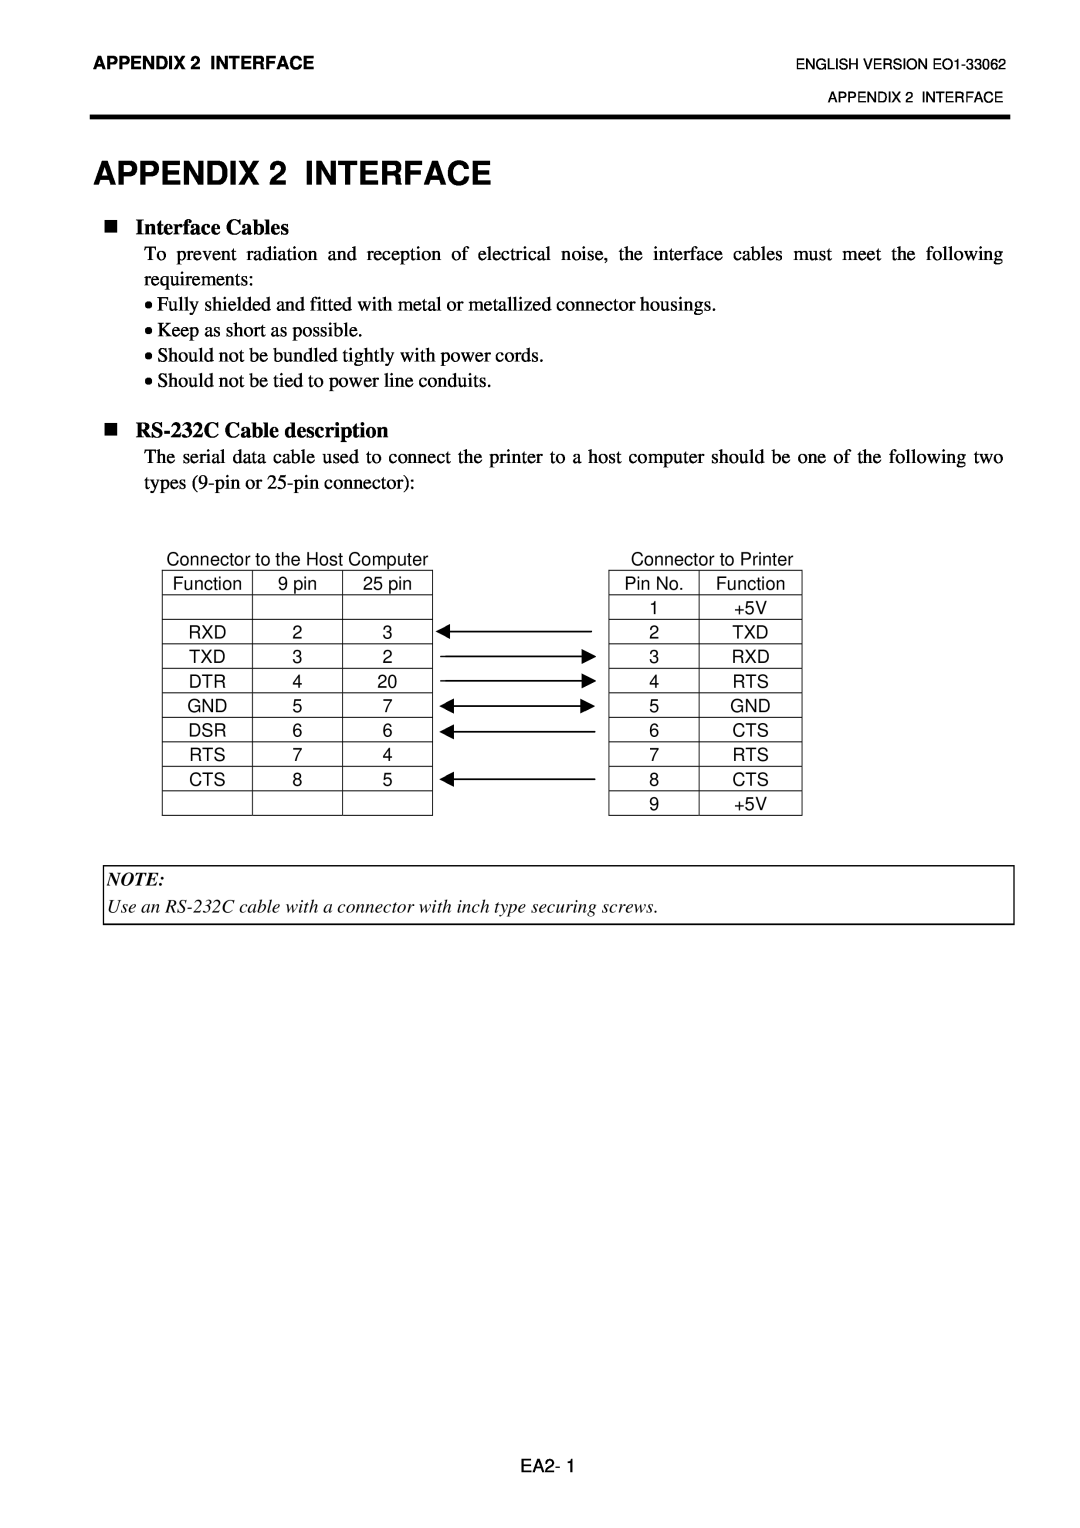 Toshiba B-SV4T owner manual APPENDIX 2 INTERFACE, Interface Cables, RS-232C Cable description 